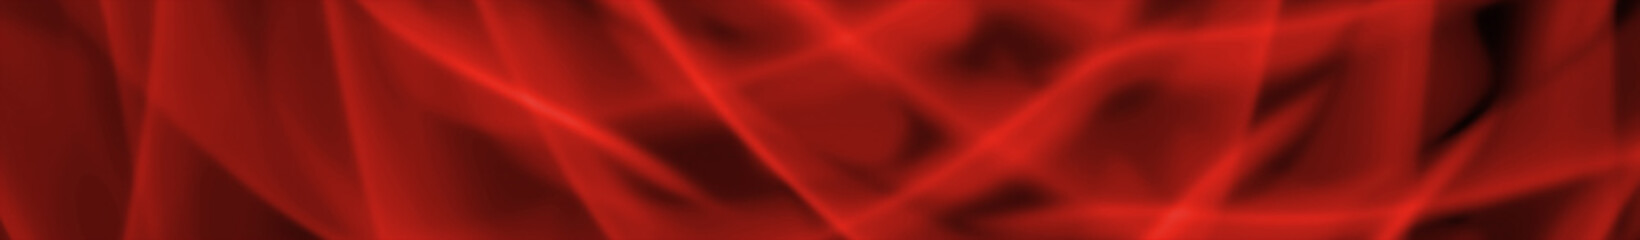 Red abstract image. Gorizontal panoramic view for kithen panel skinali. 3d render